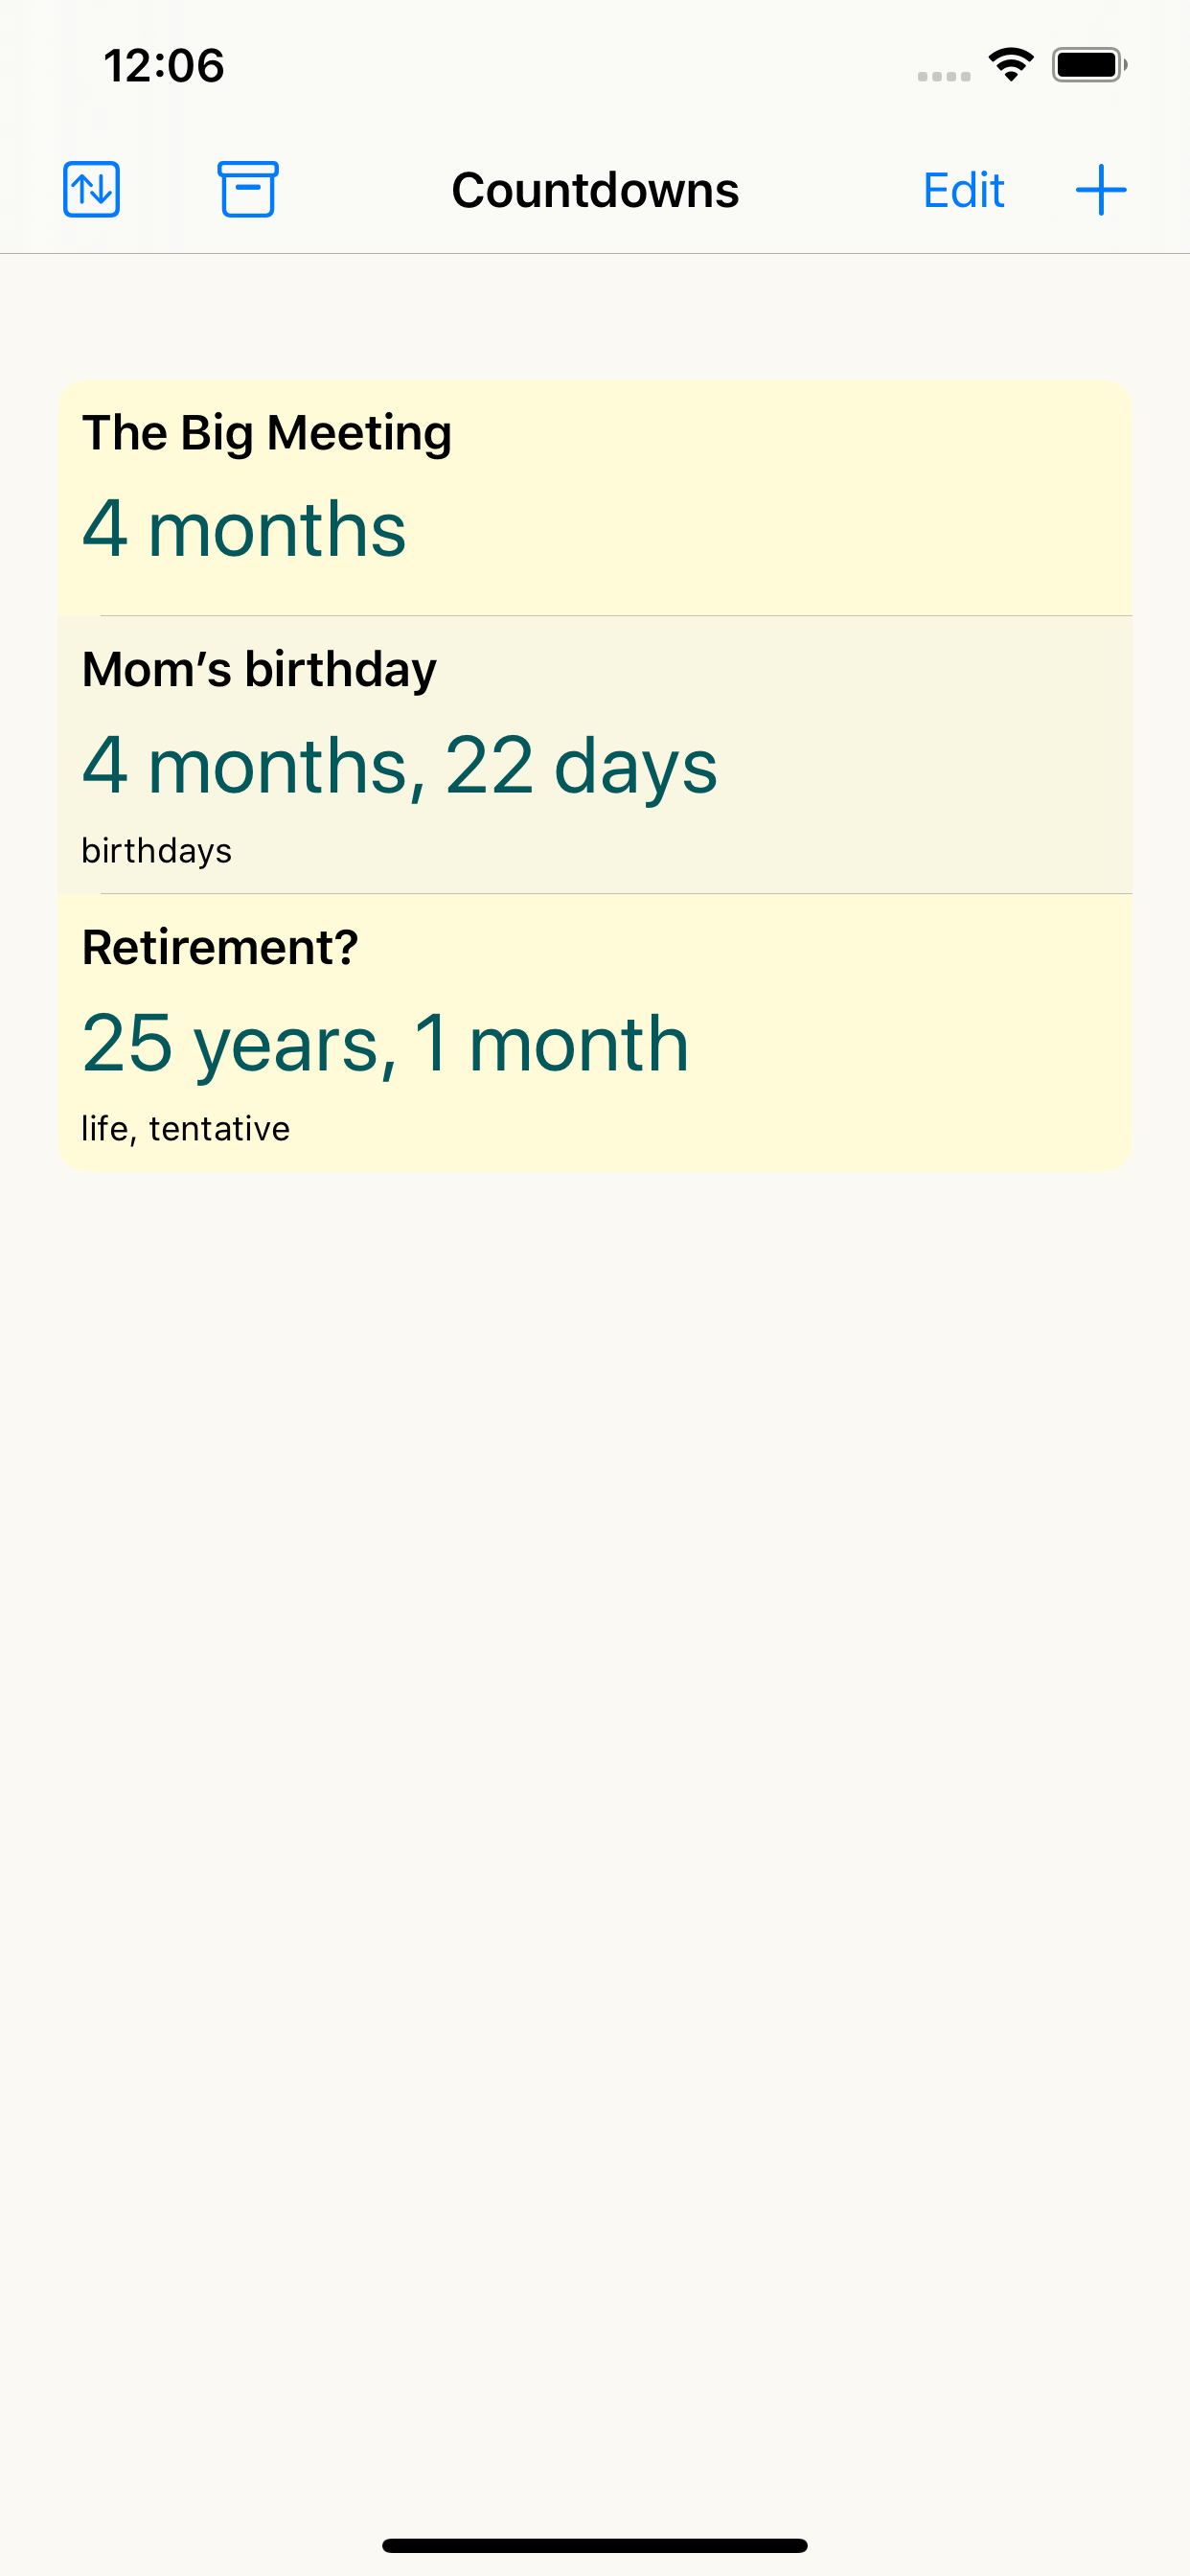 App screenshot showing a list of countdowns